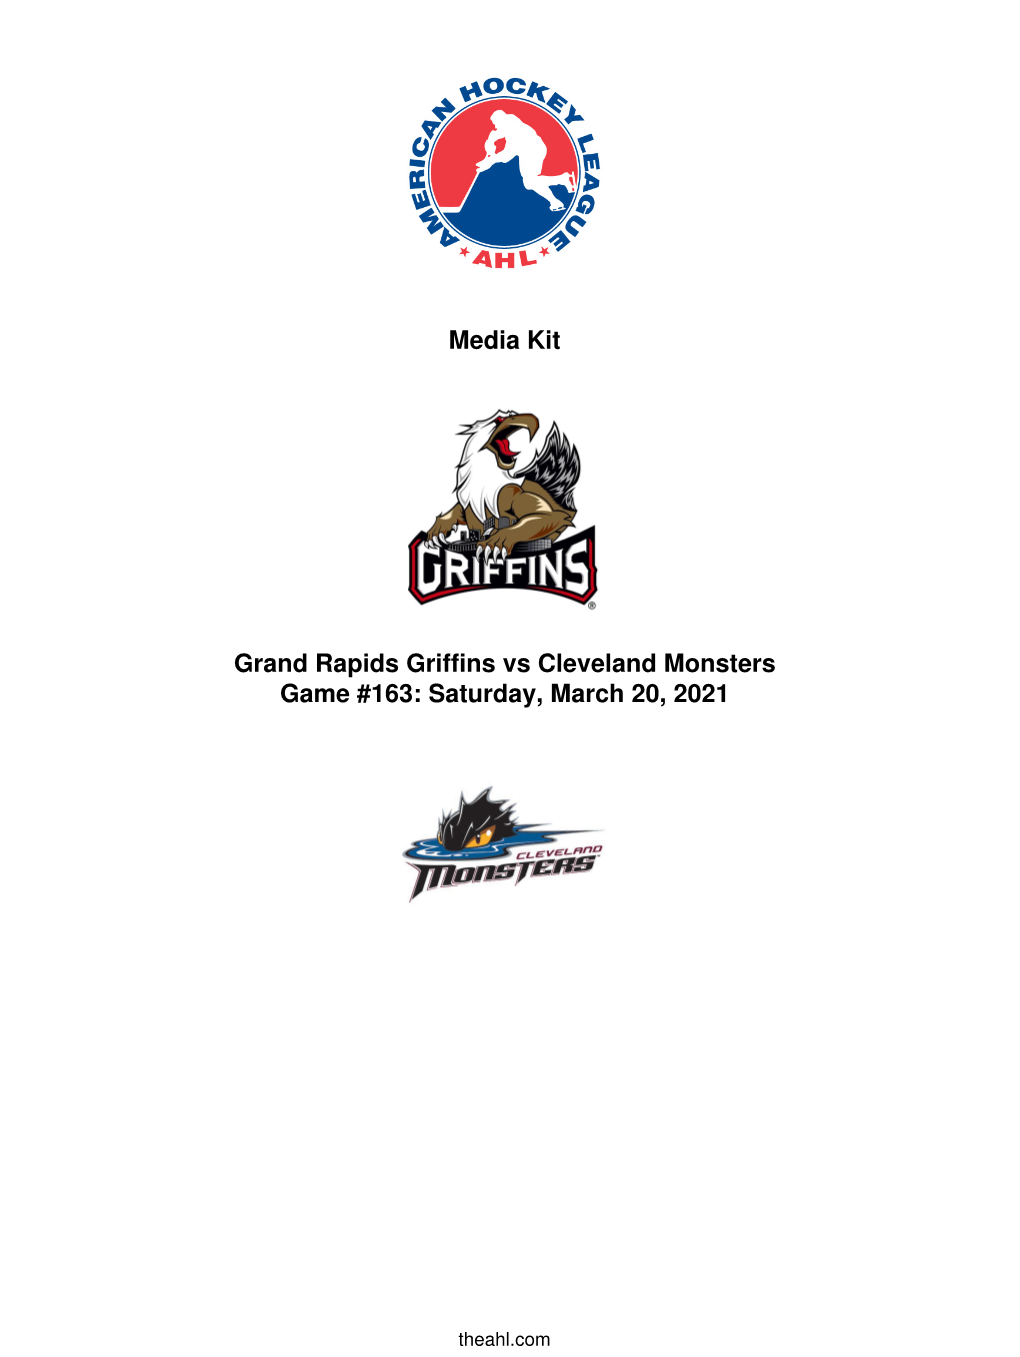 Media Kit Grand Rapids Griffins Vs Cleveland Monsters Game #163